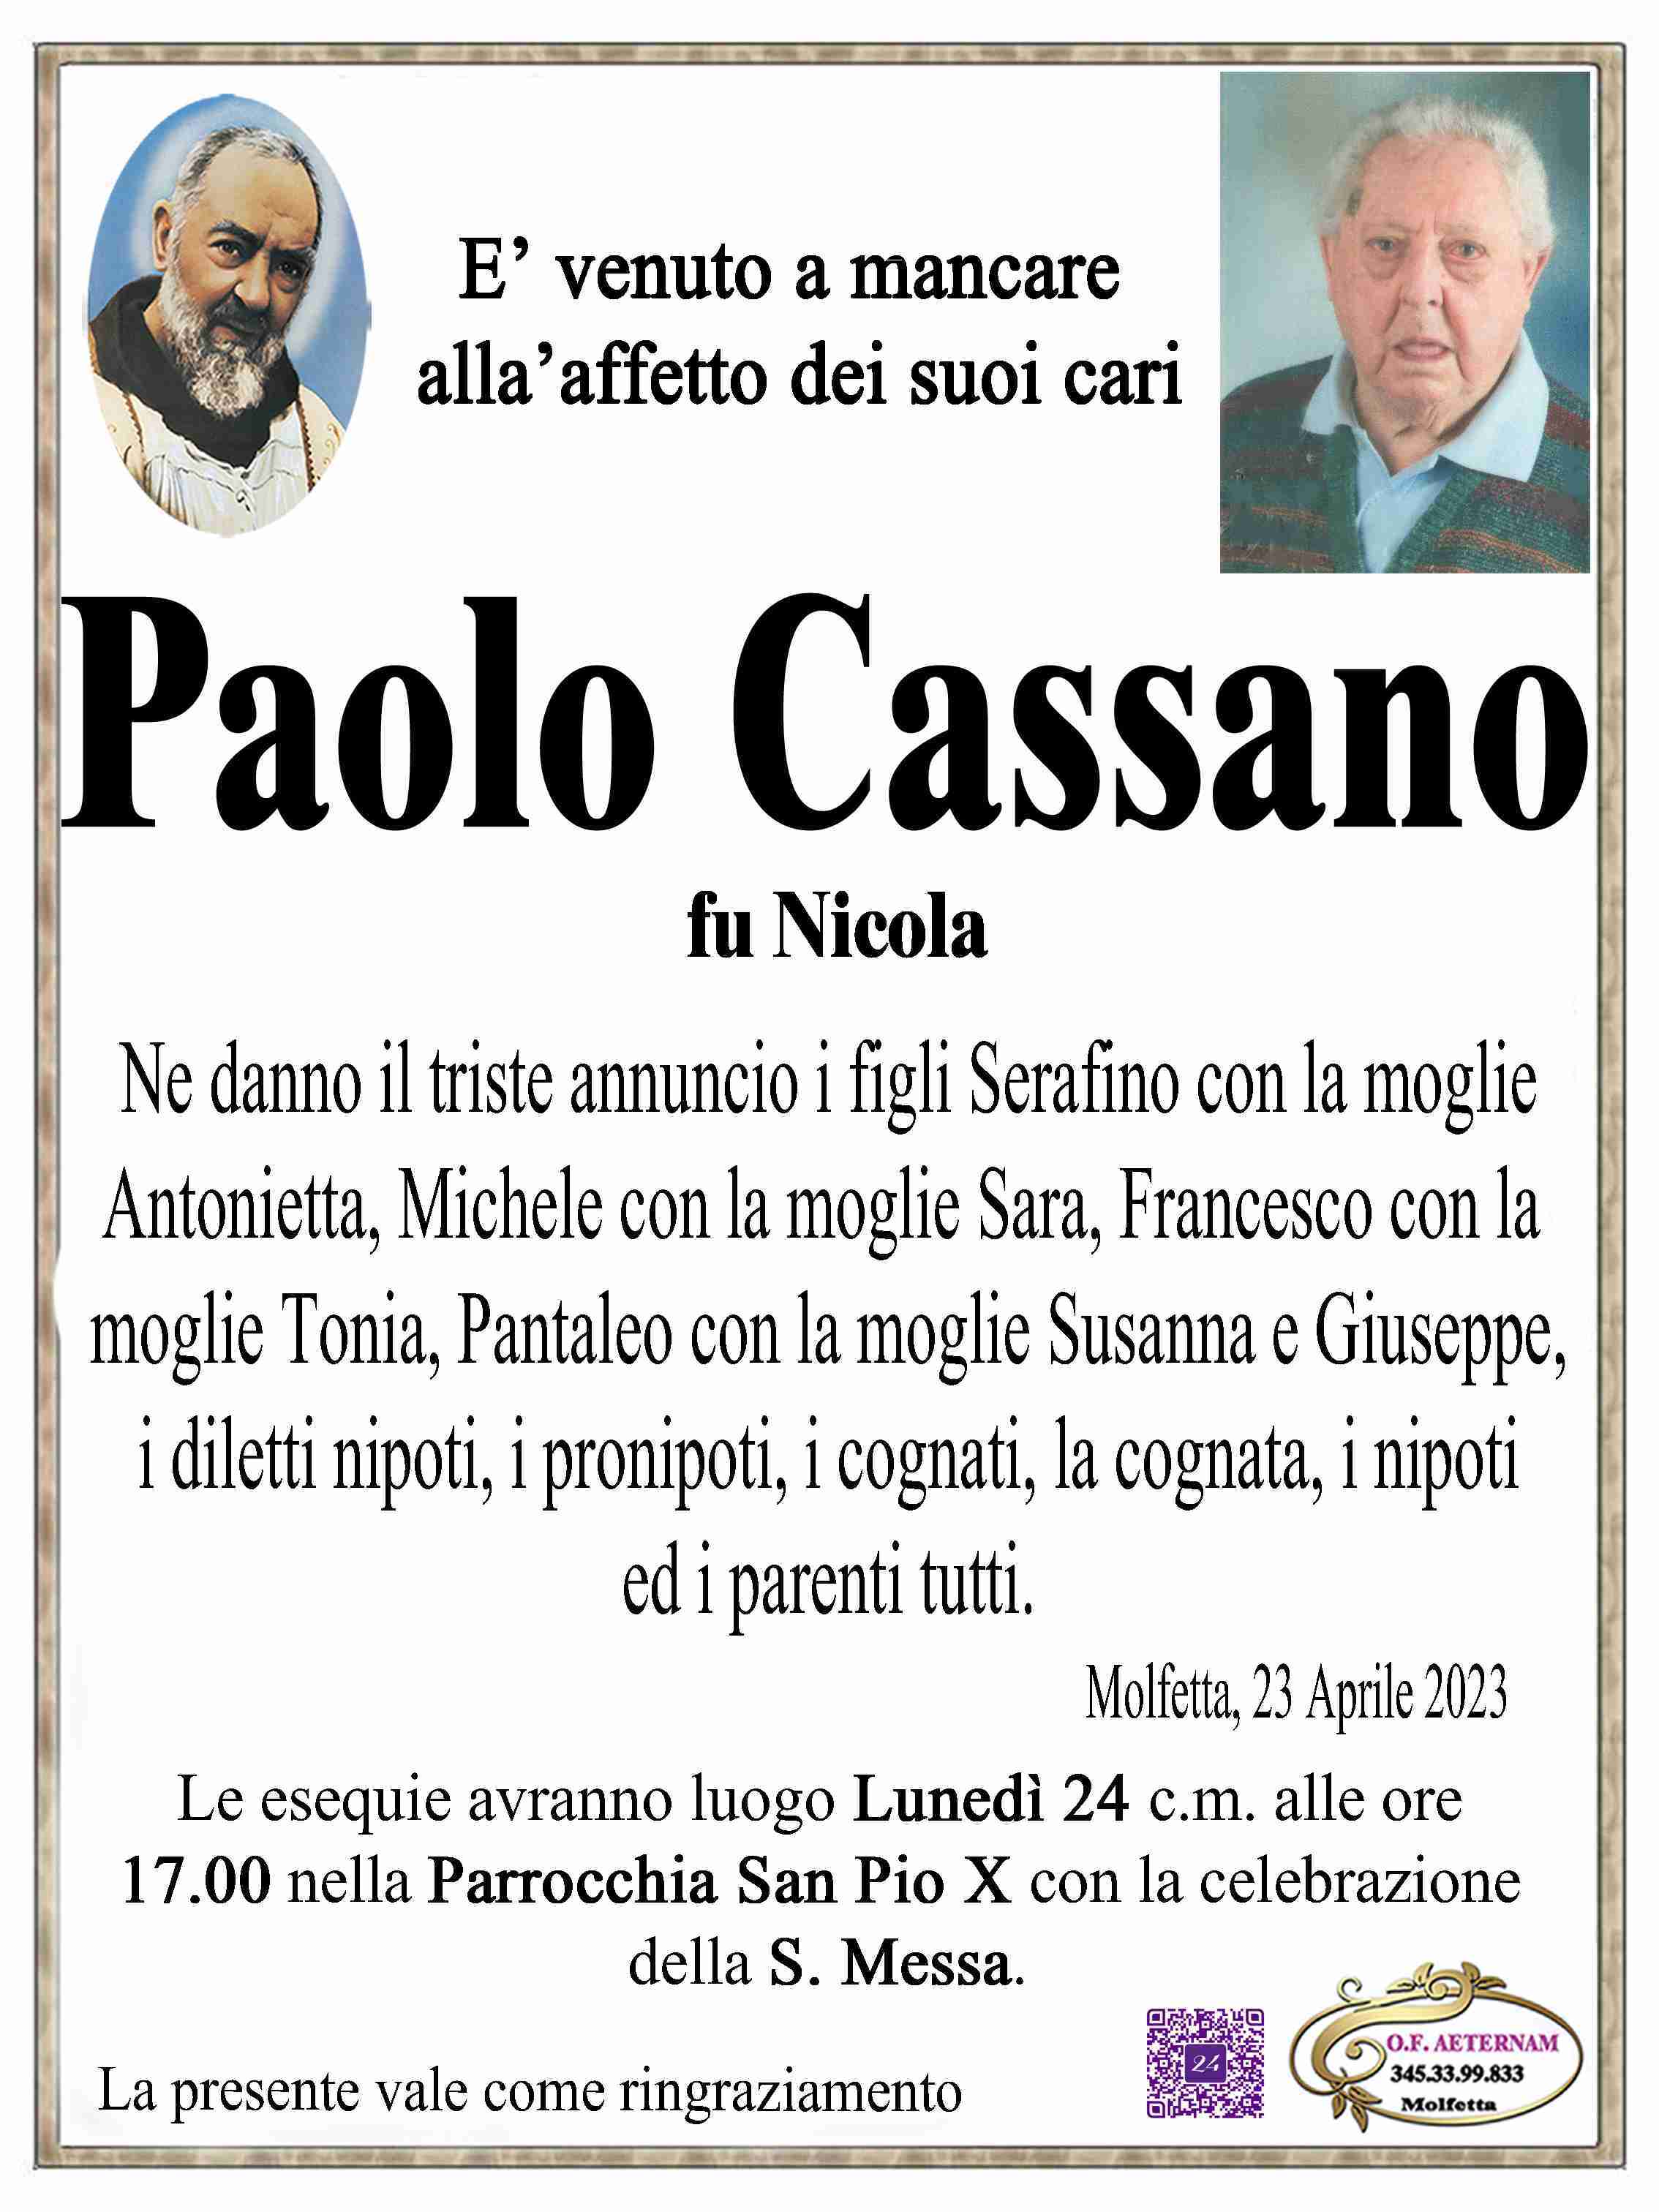 Paolo Cassano